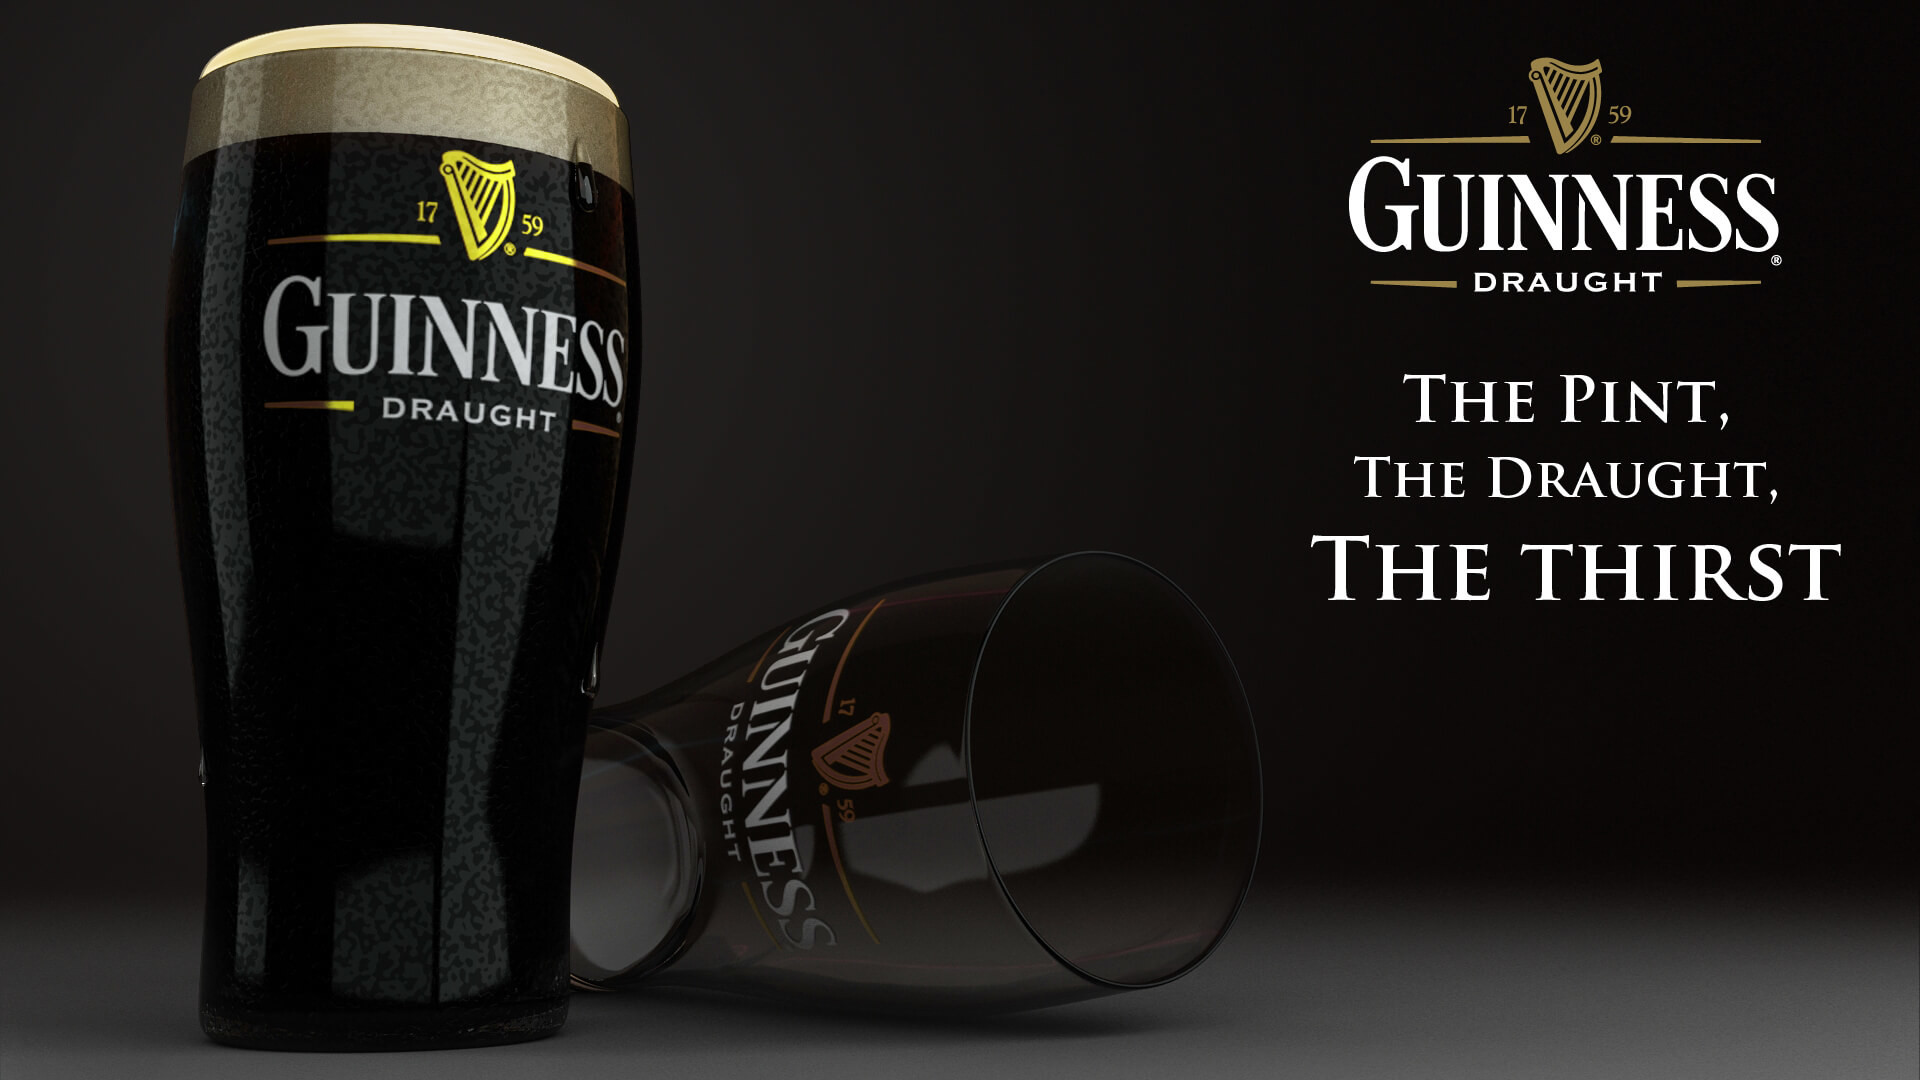 Guinness Advertising. Western Illustration